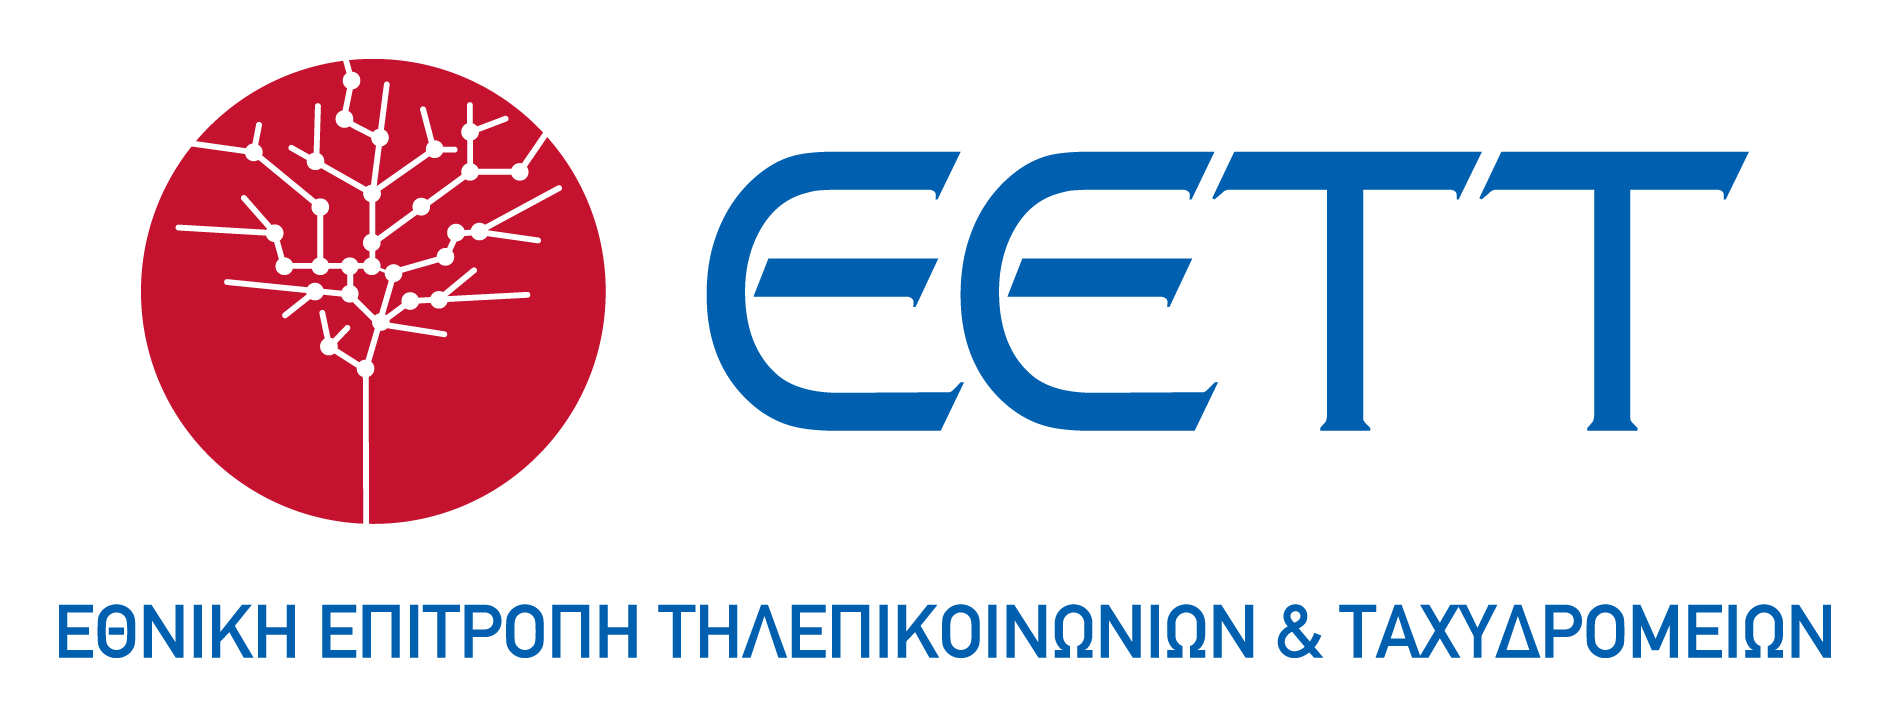 More information about "EETT προς παρόχους: "Πρέπει να αναγράφετε τις τελικές τιμές των υπηρεσιών""